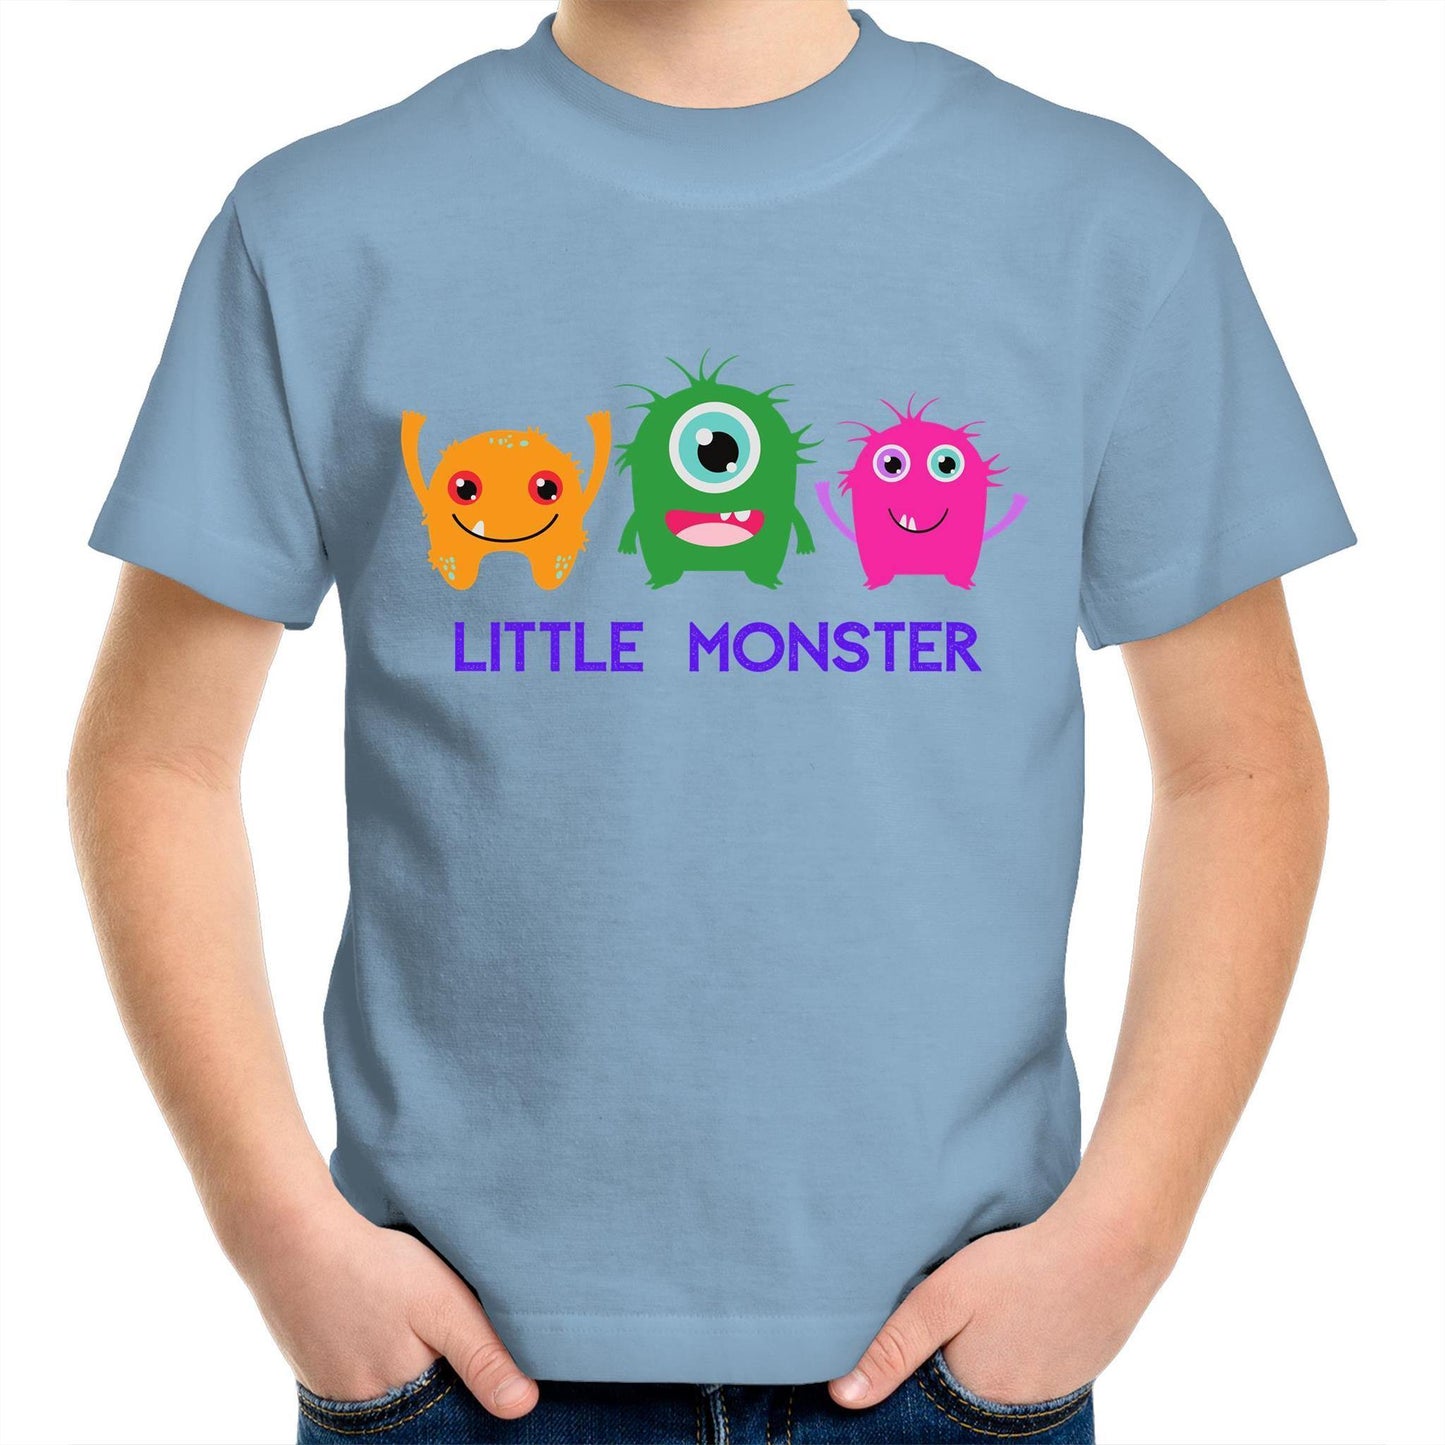 Little Monster - Kids Youth Crew T-Shirt Carolina Blue Kids Youth T-shirt Funny Sci Fi